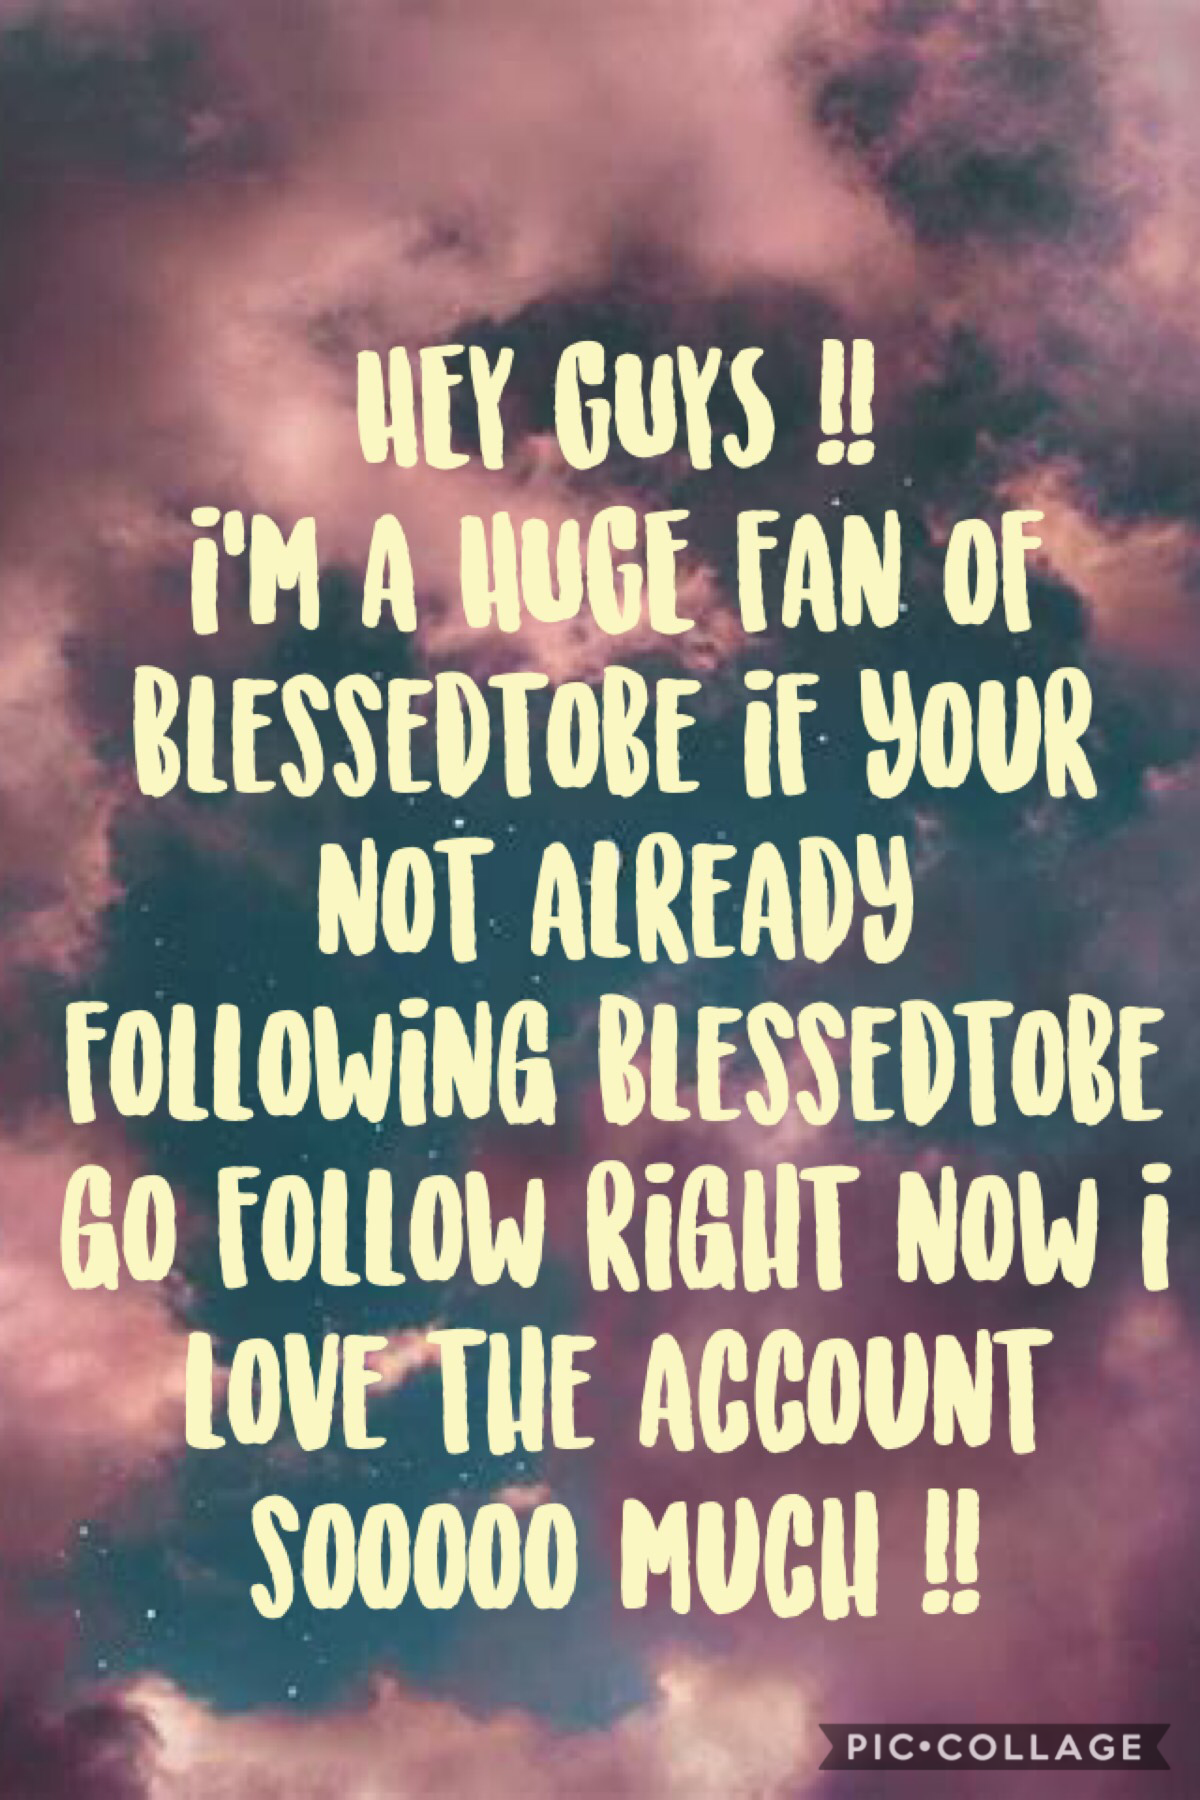 Go follow Blessedtobe !!!